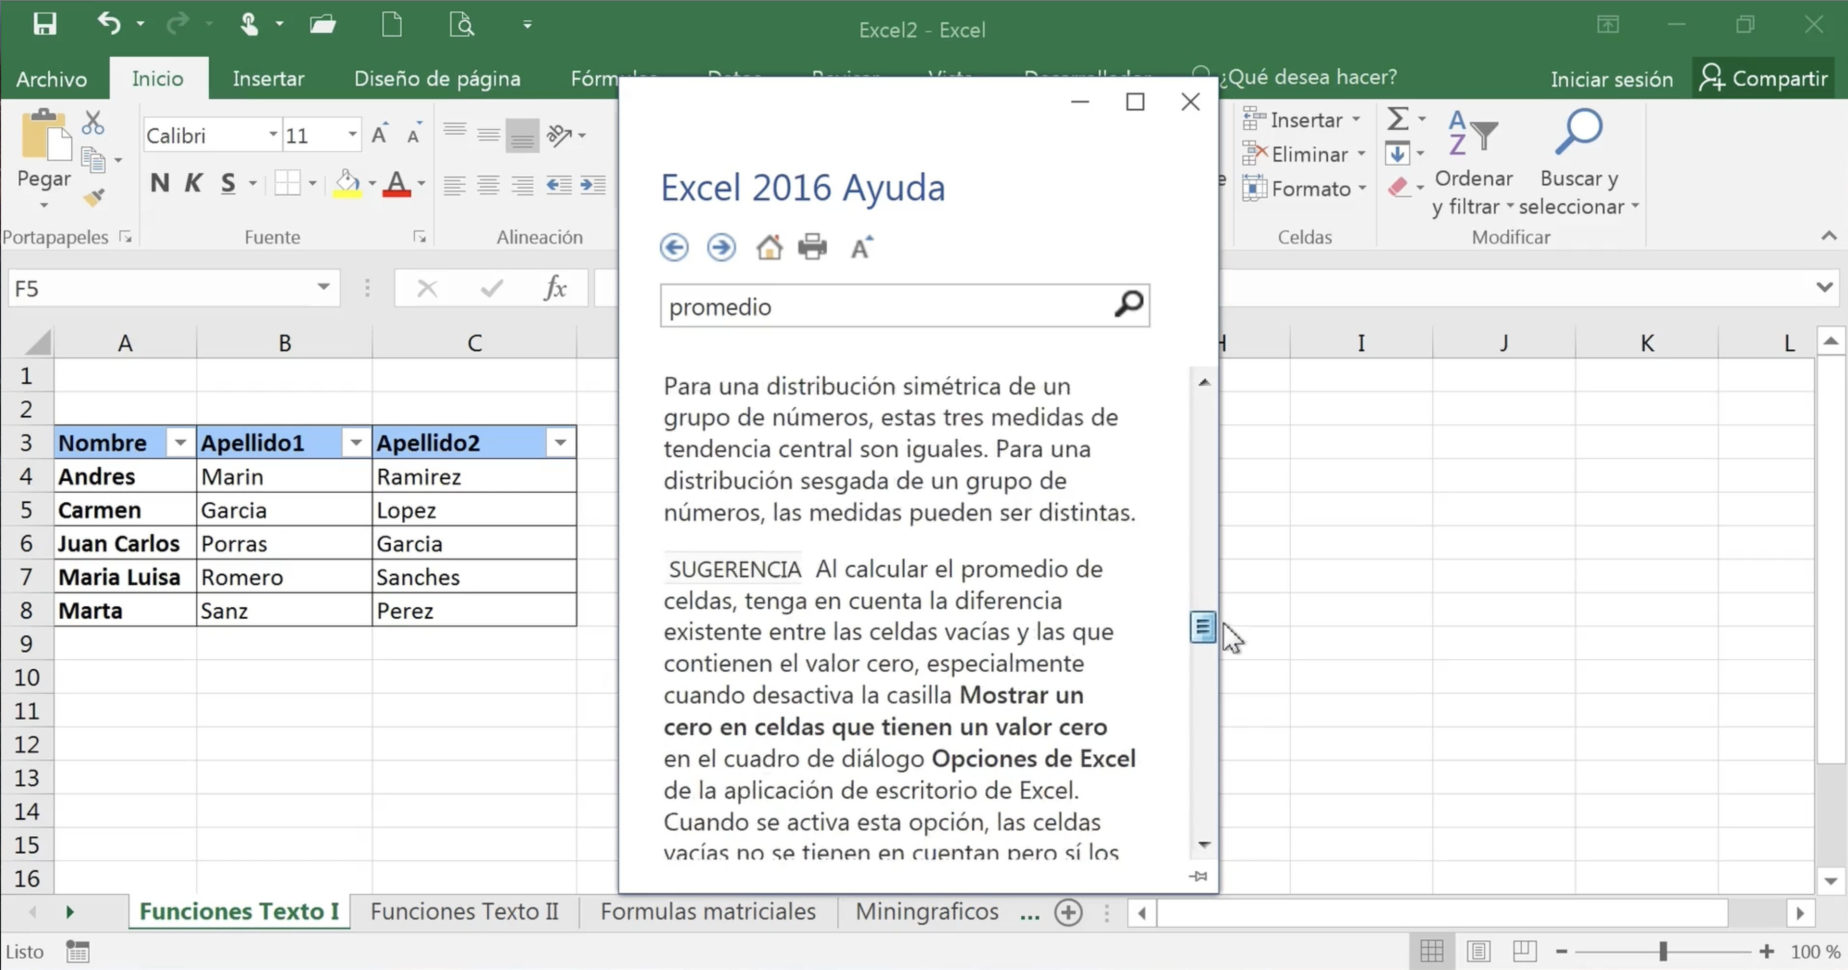 Free Trial Excel Spreadsheet regarding Microsoft Excel Spreadsheet ...